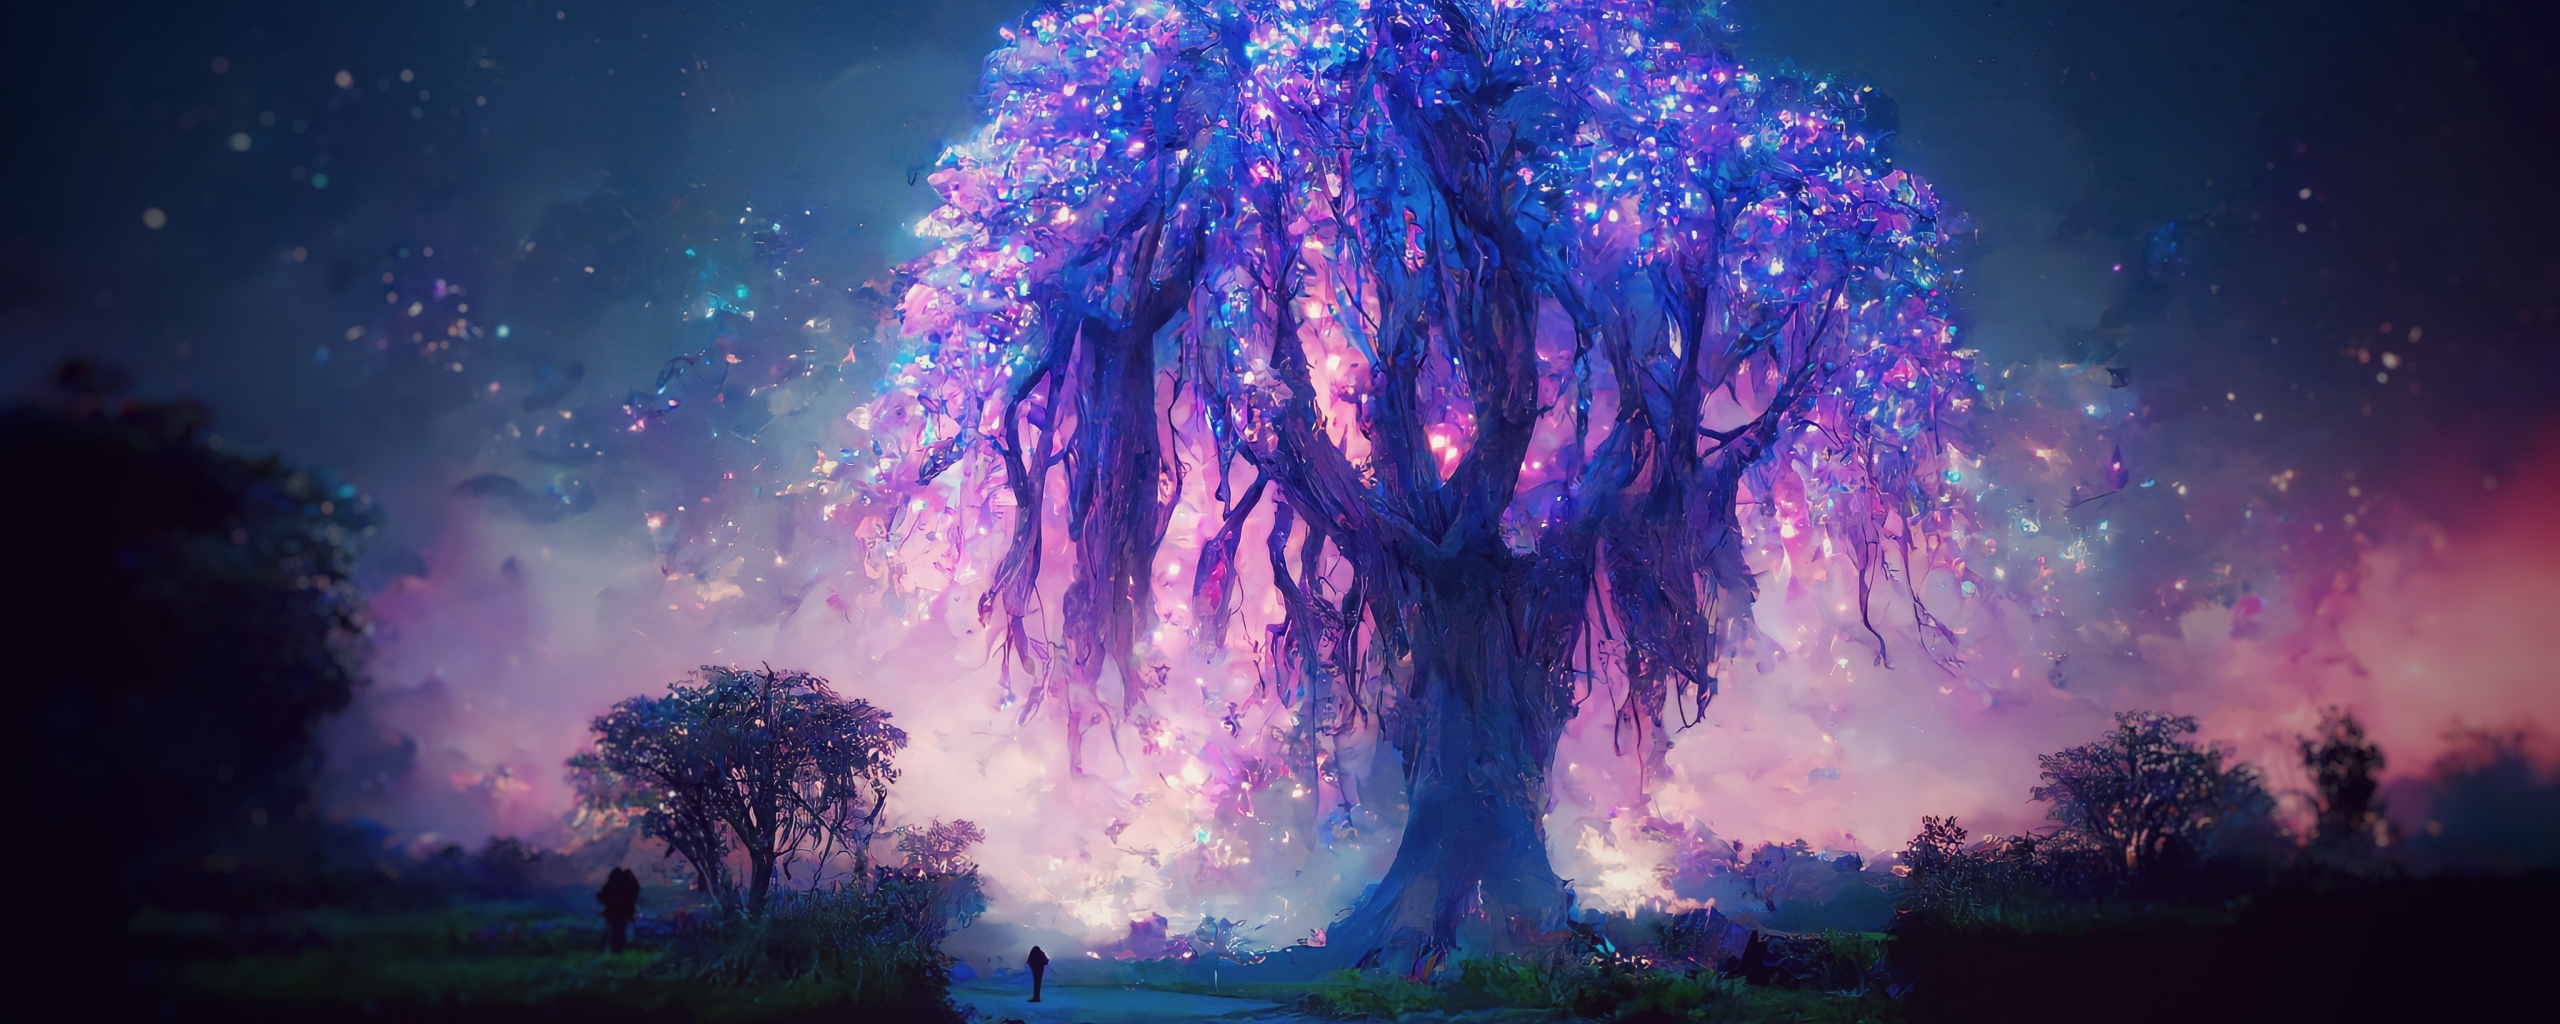 Download wallpaper 2560x1024 night, violet tree, fantasy, dual wide 21: ...